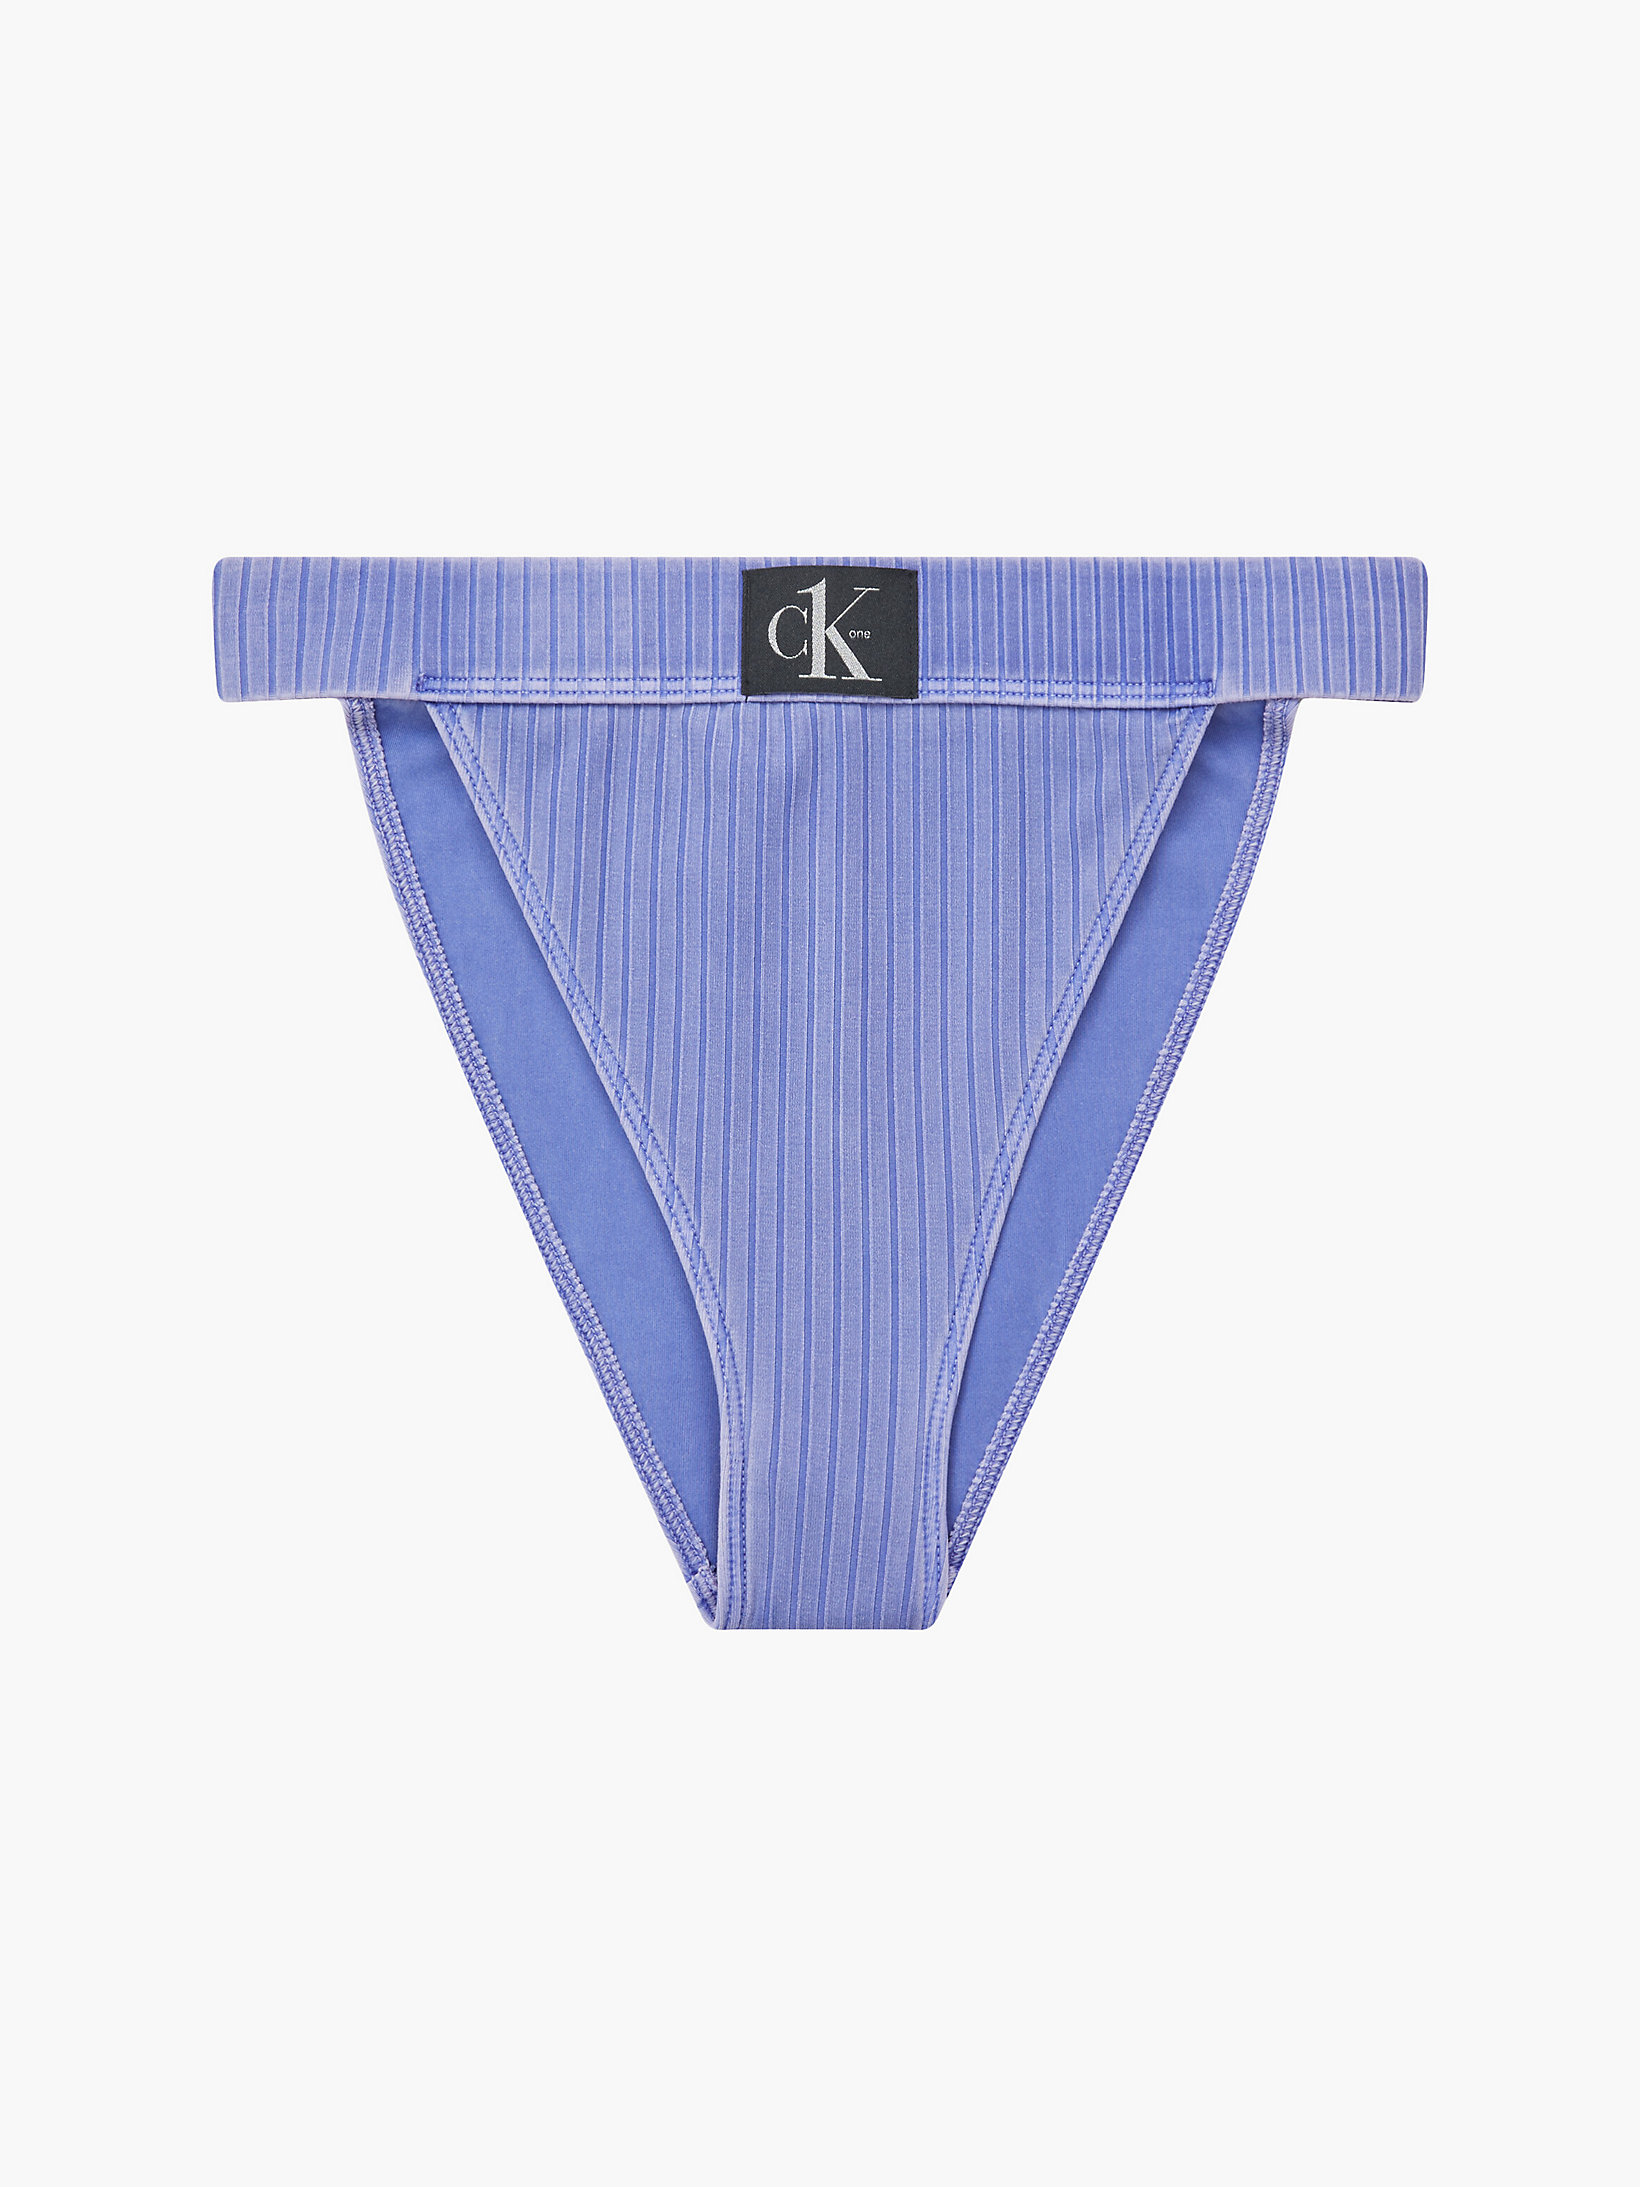 Wild Bluebell High Waisted Bikini Bottoms - CK Authentic undefined women Calvin Klein